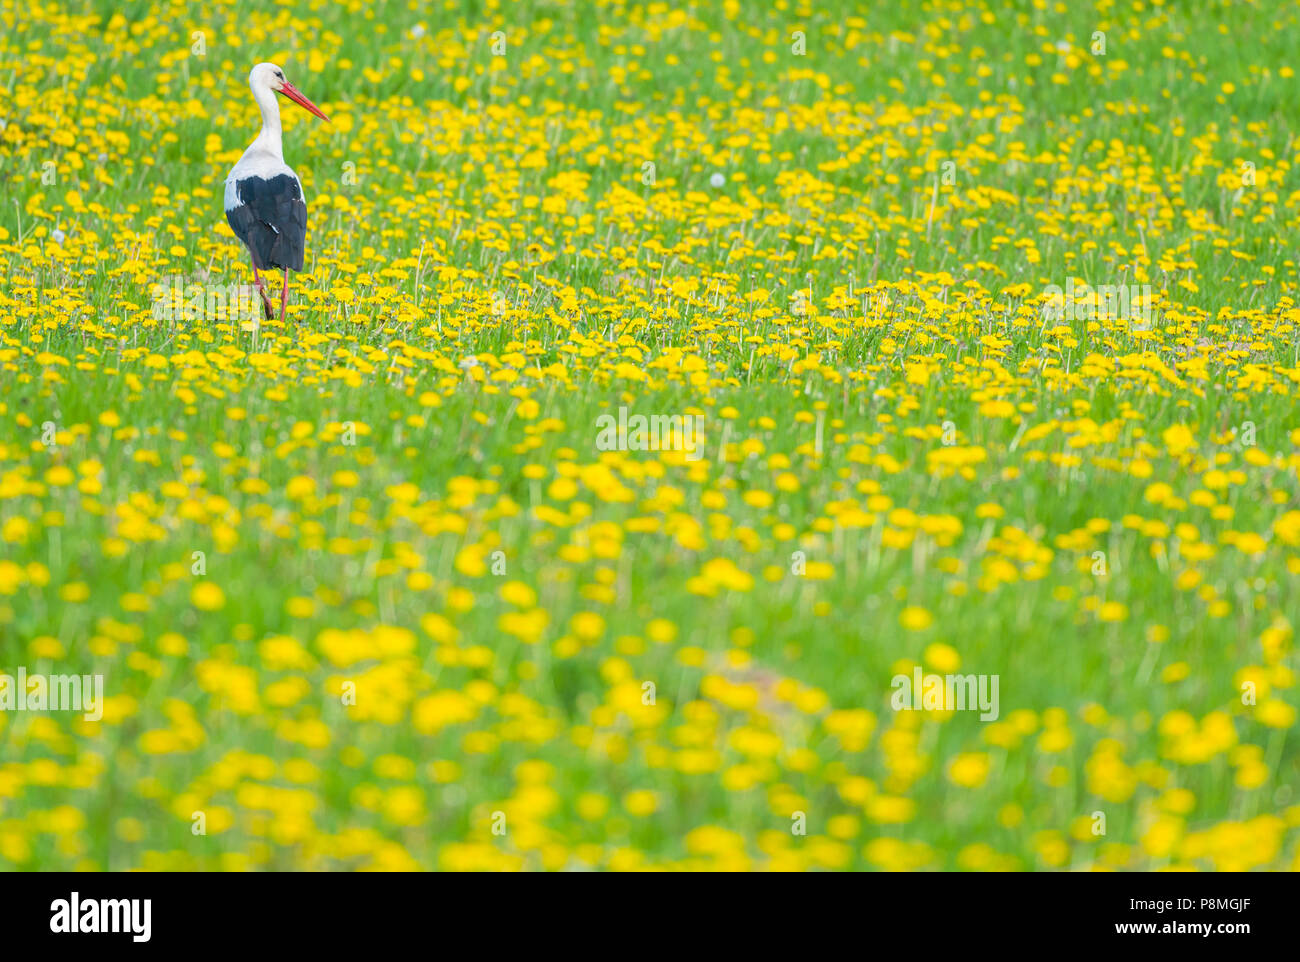 white stork in a field of dandelions Stock Photo